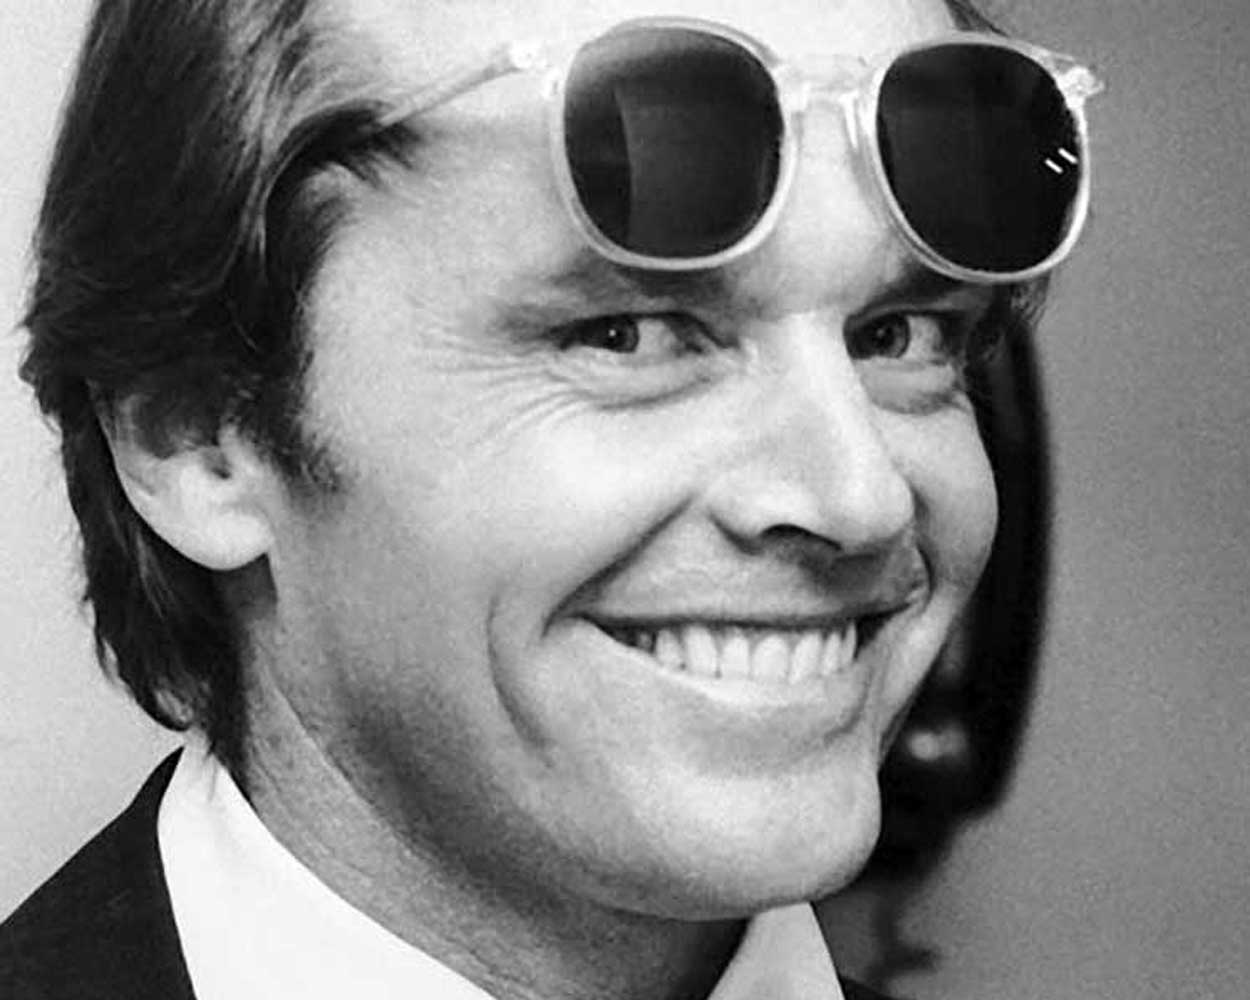 Jack Nicholson Sunglasses